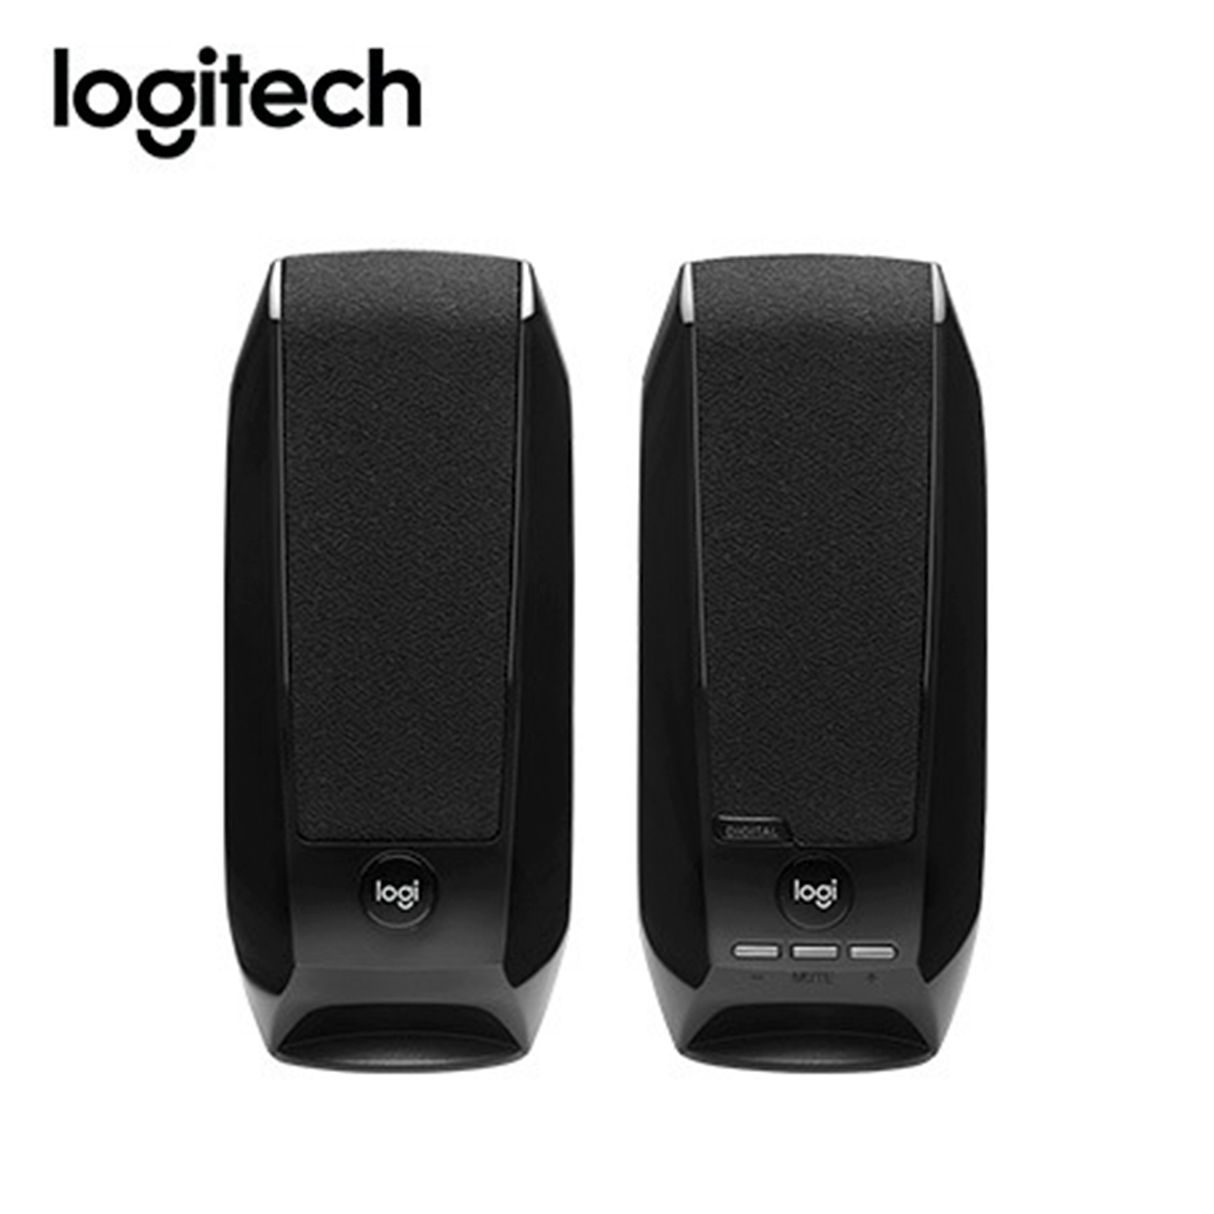 Parlante Logitech S-150 USB Black Retail Box